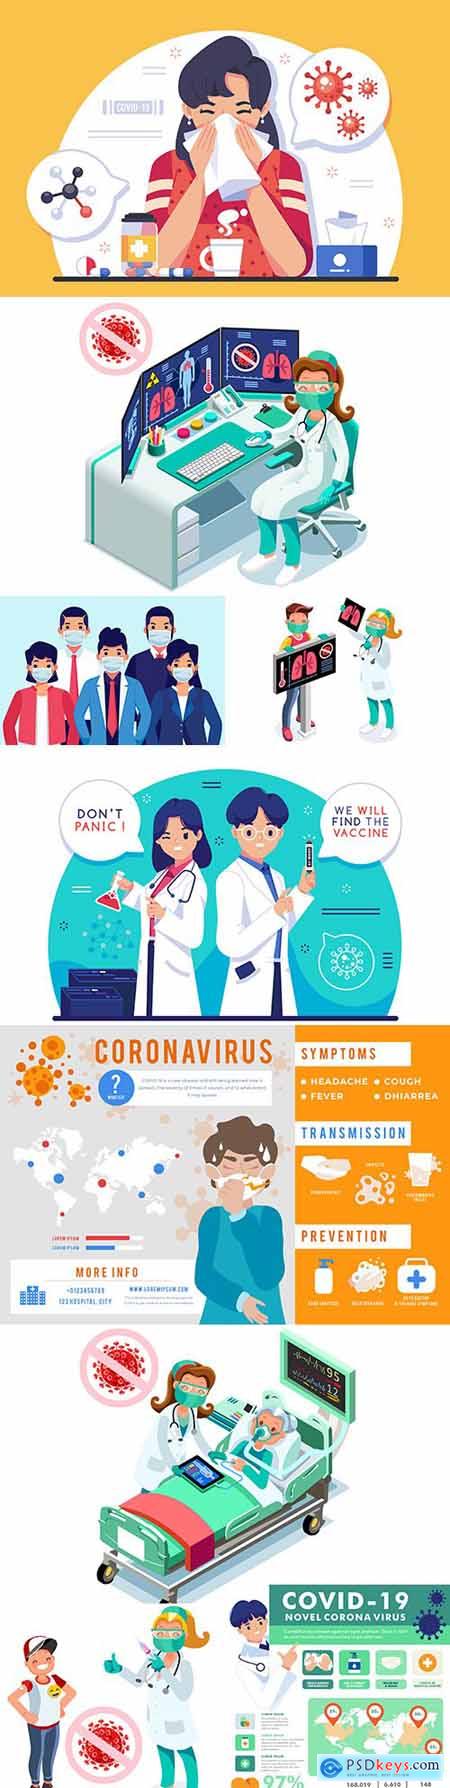 Coronavirus symptoms and first signs medical examination